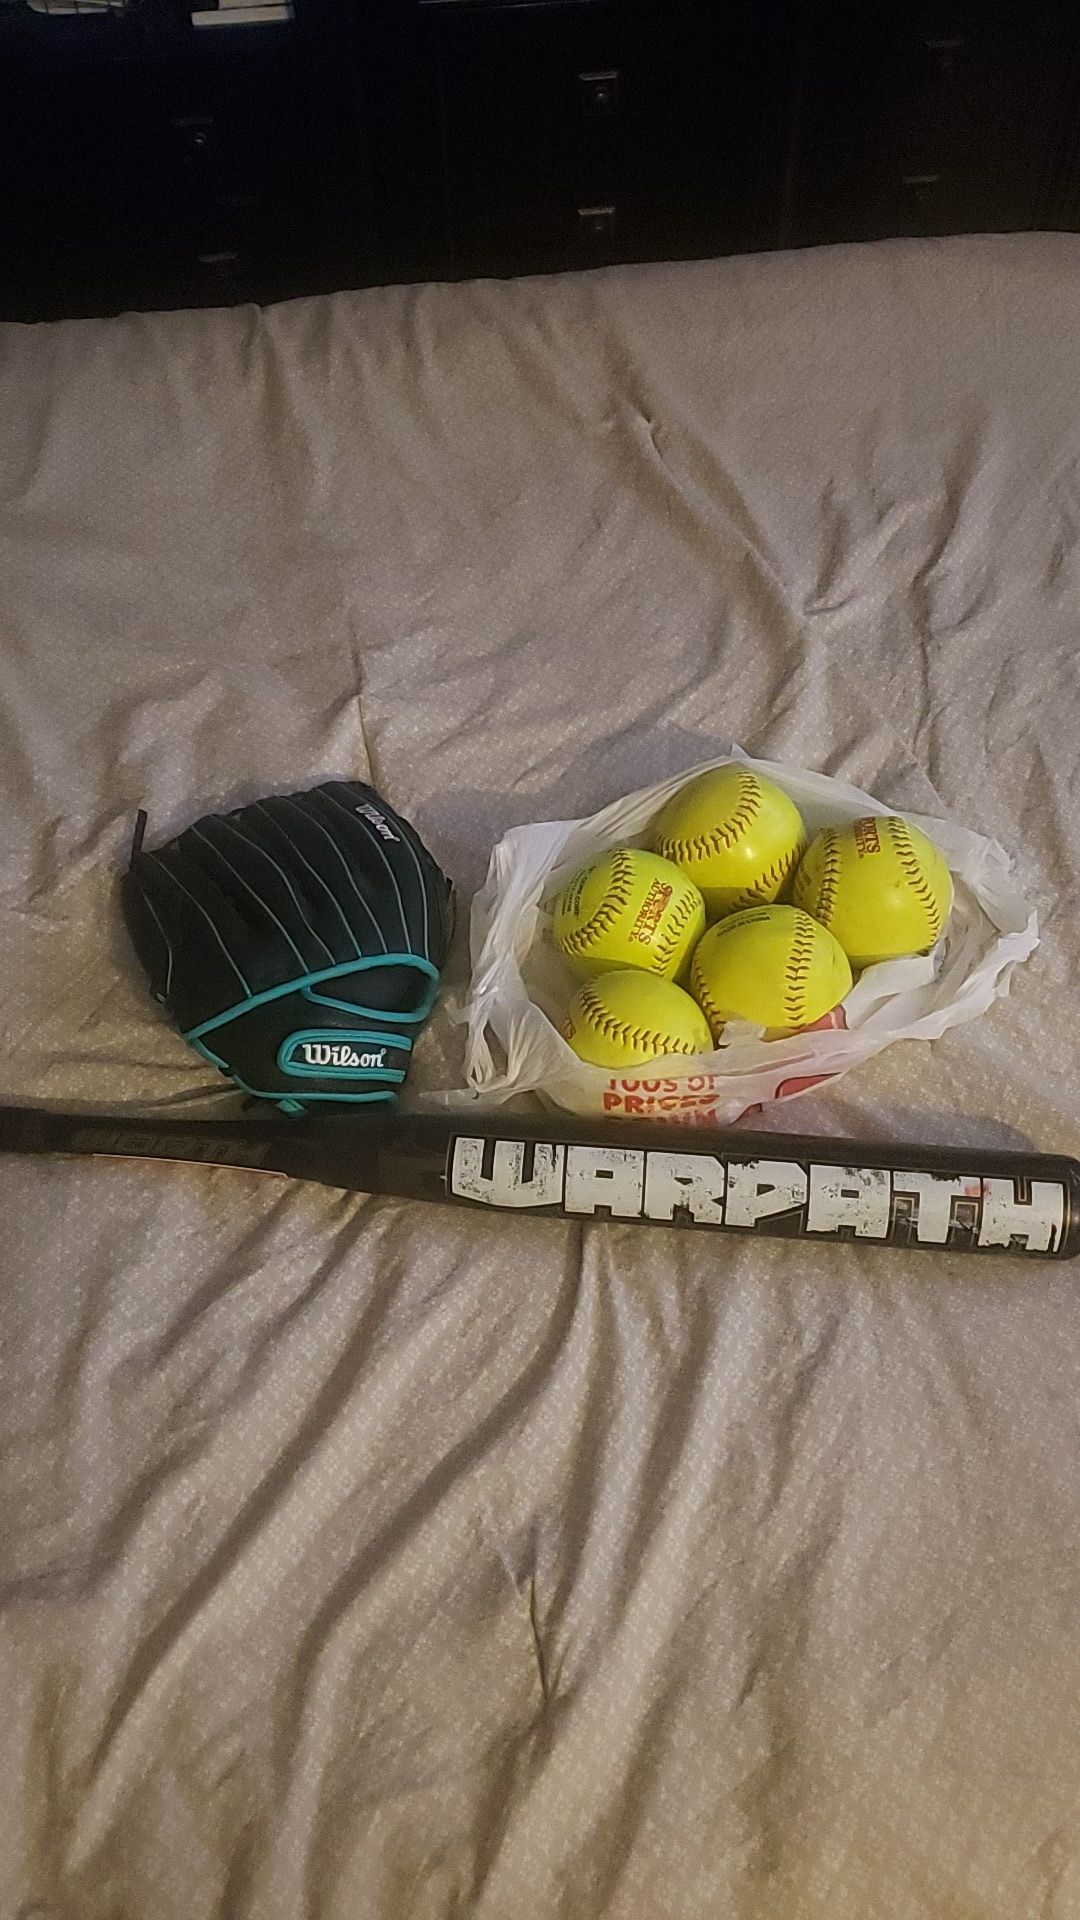 softball gloves, bat and balls